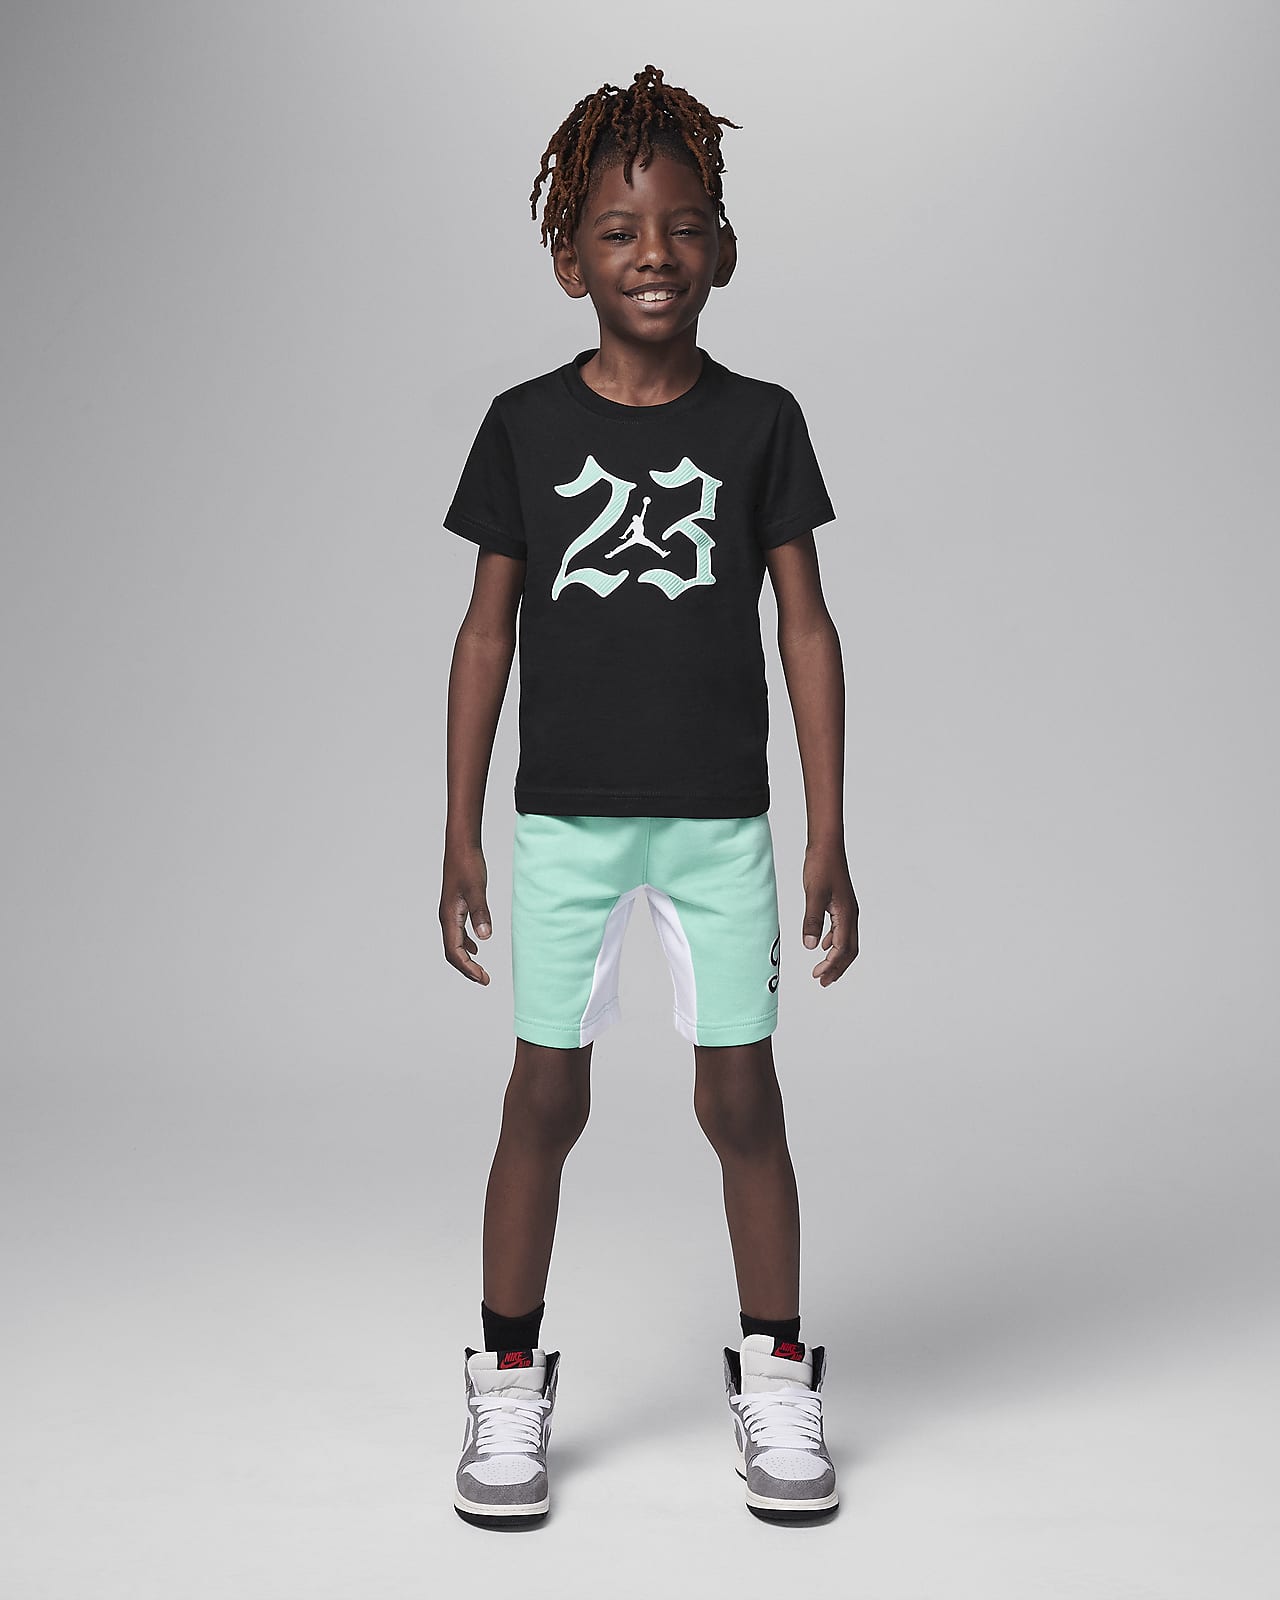 Jordan MVP 23 Little Kids' Shorts Set